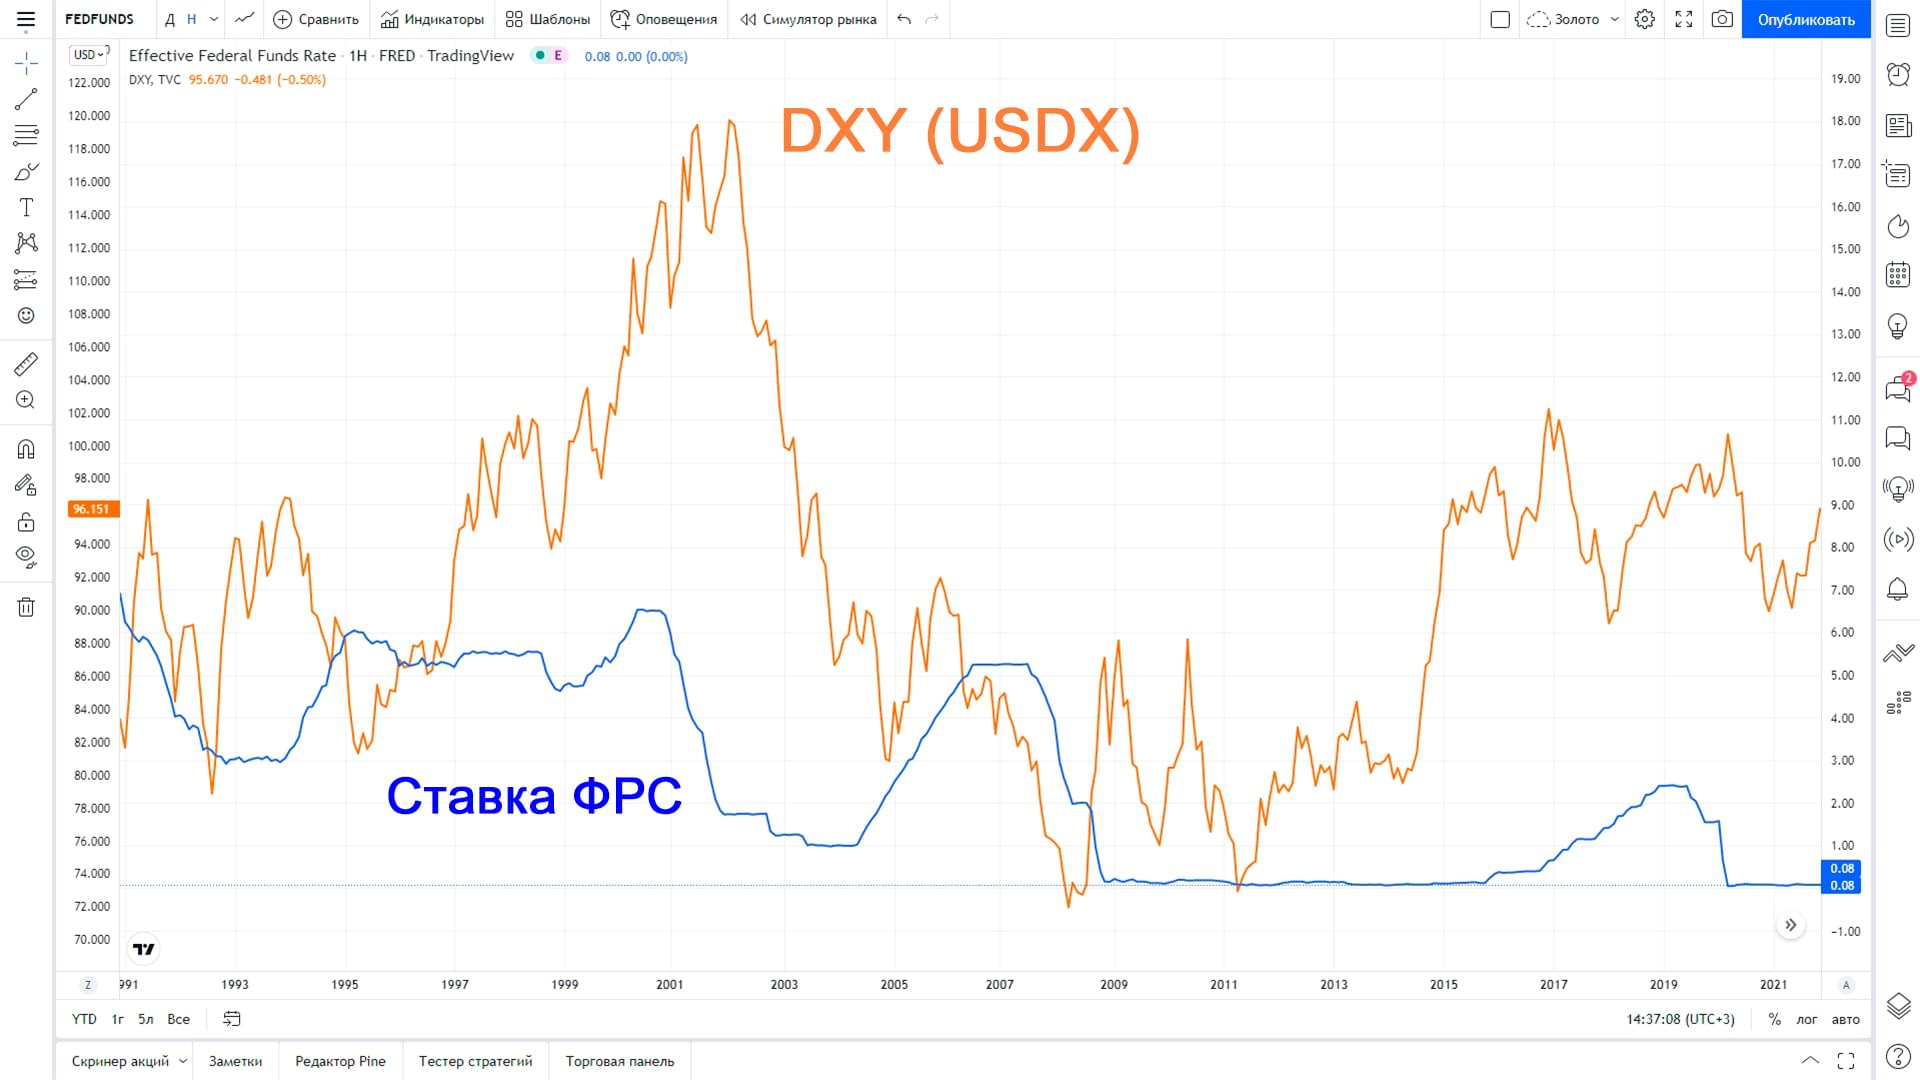 Корреляция процентной ставки ФРС и индекса доллара DXY.